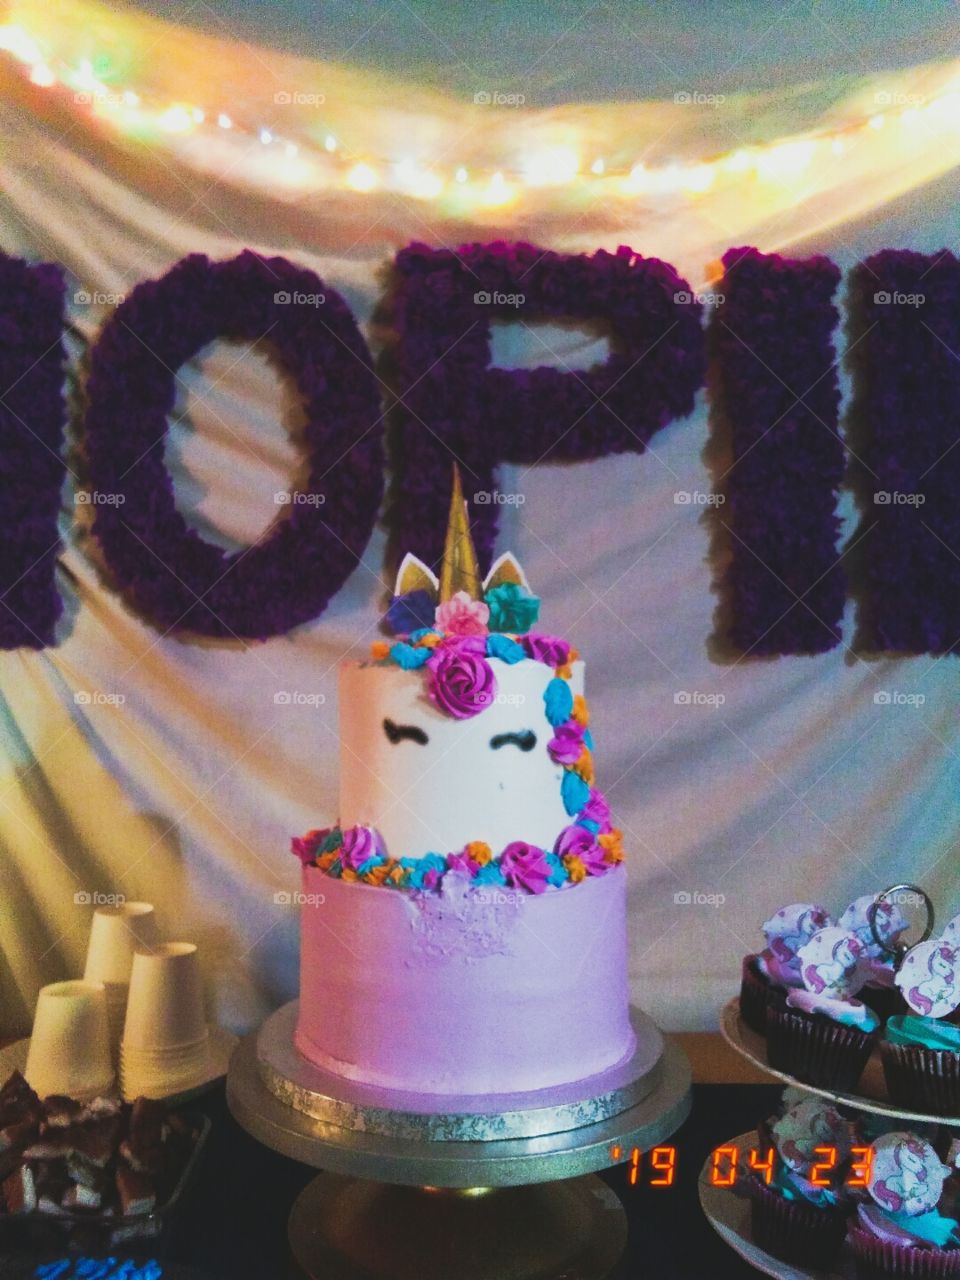 birthdays are more unique with unicorns 🦄